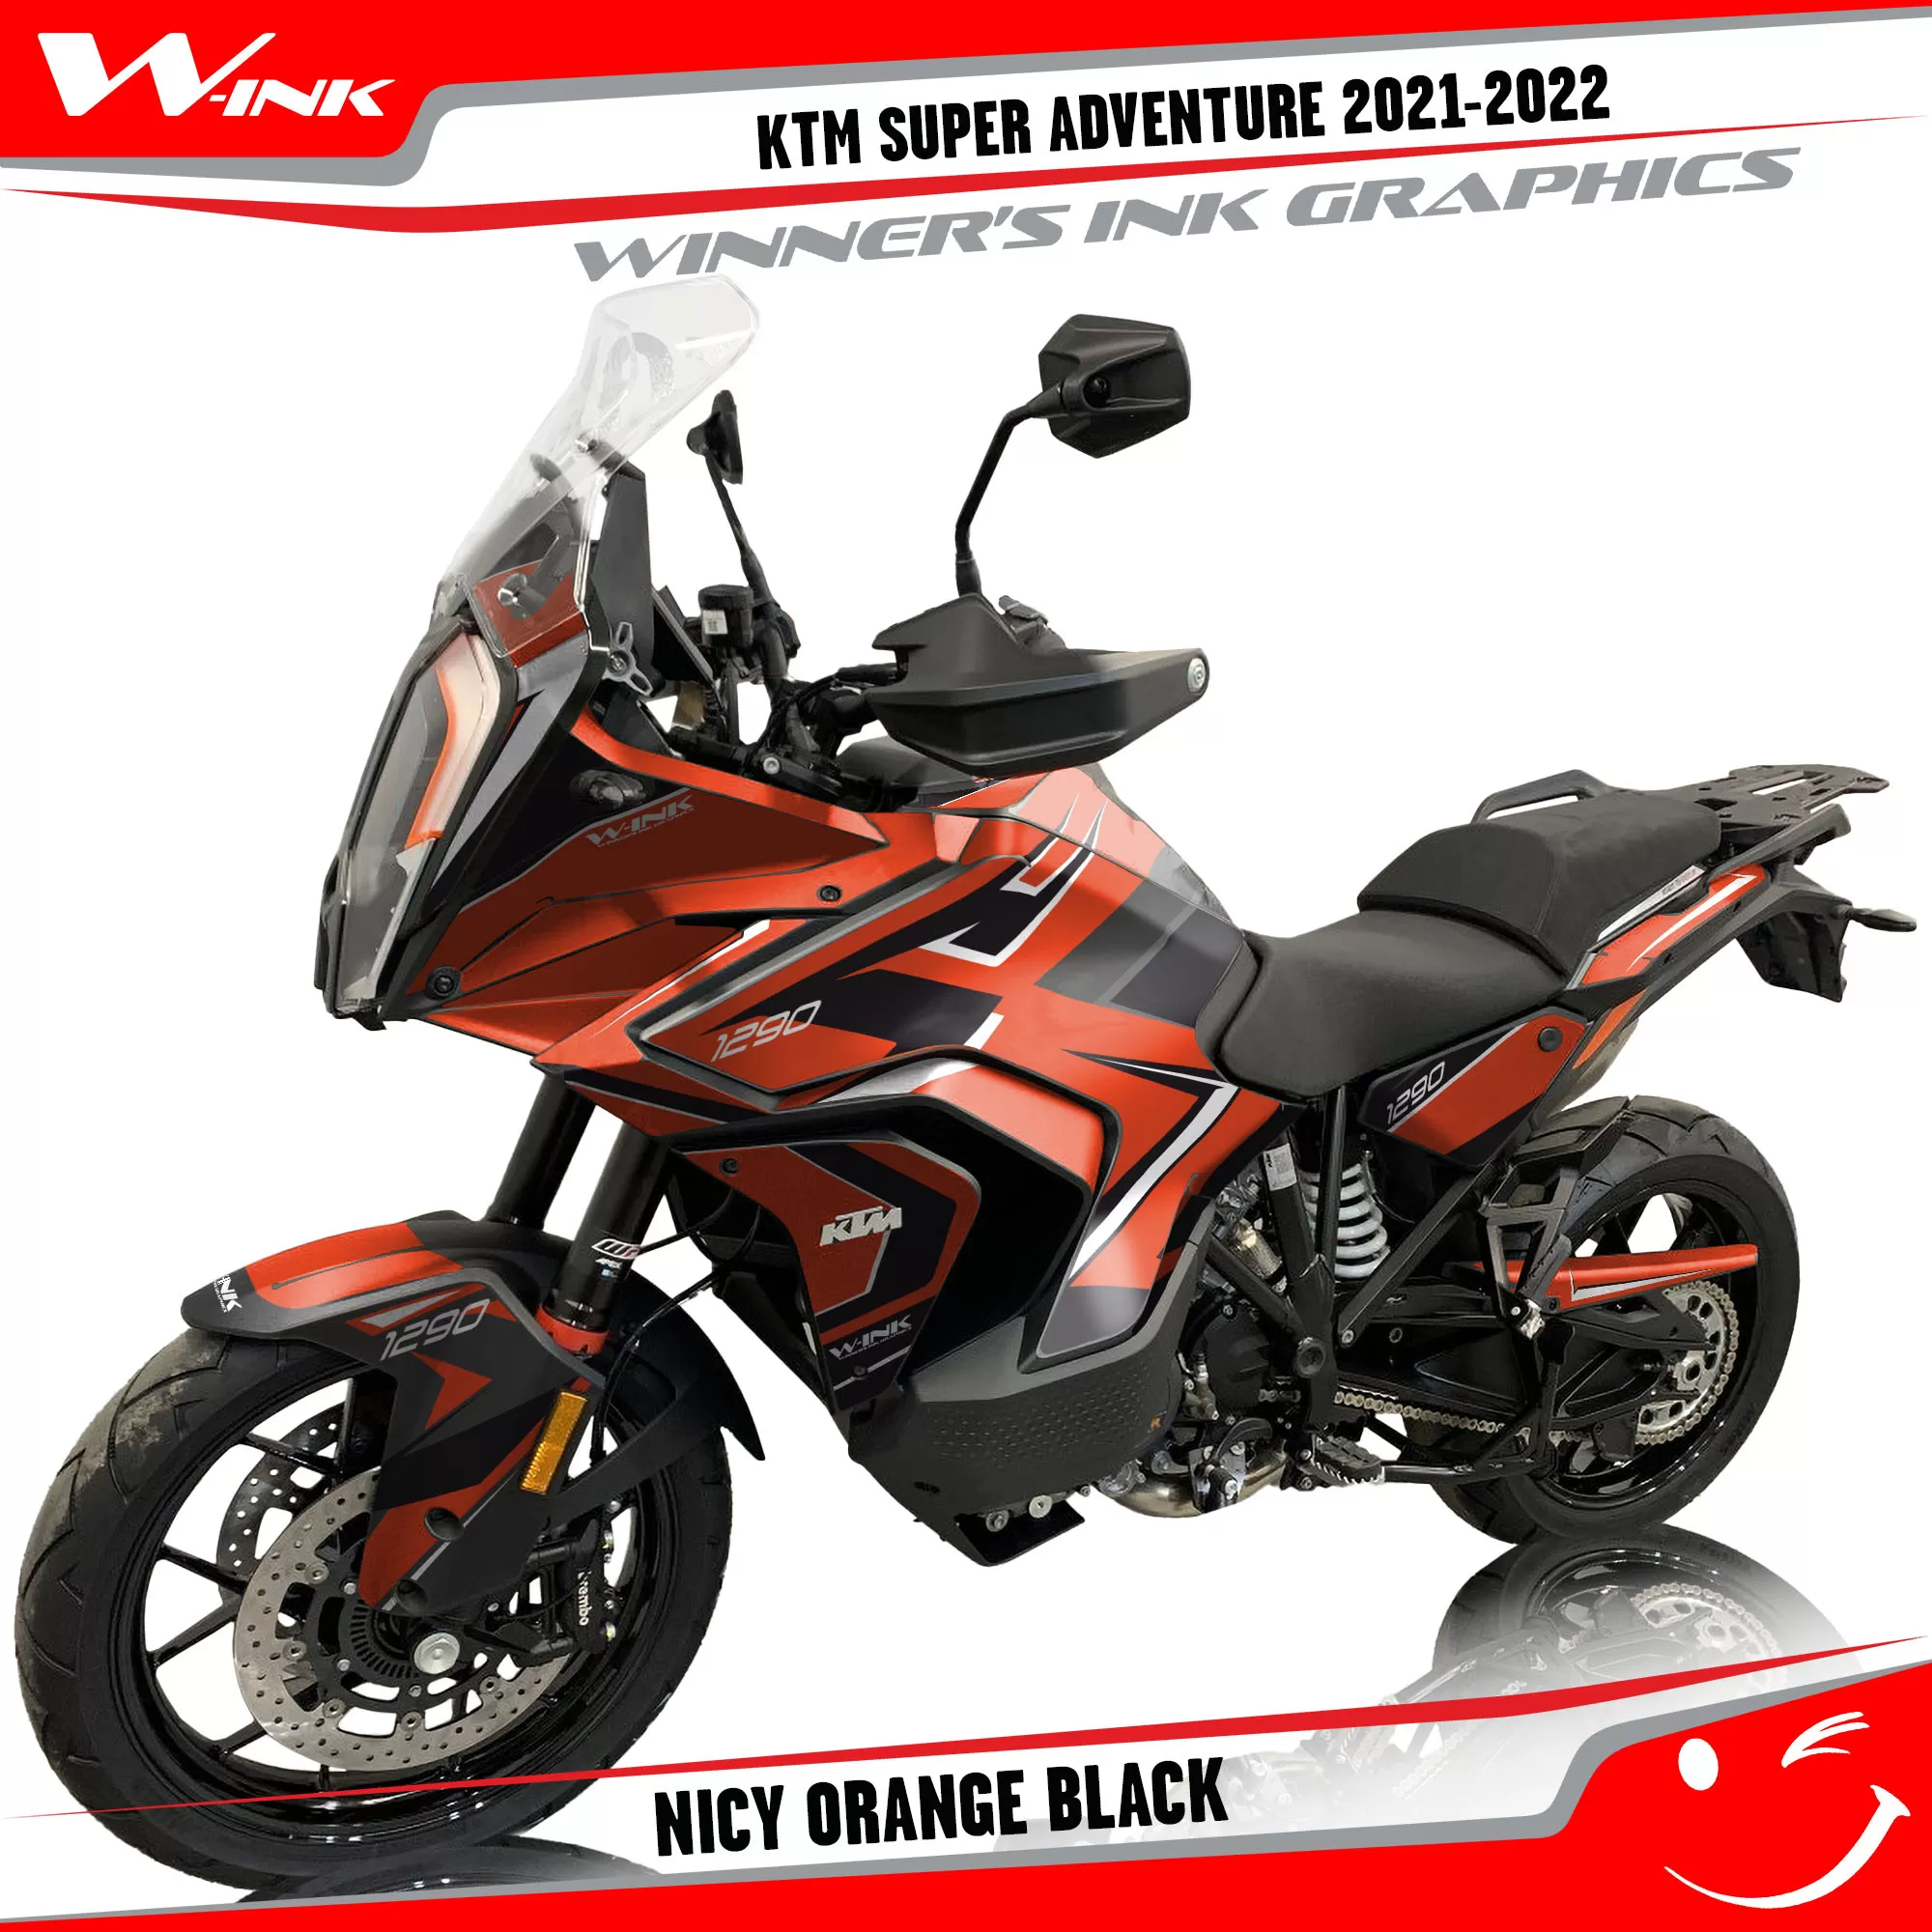 KTM-Super-Adventure-S-2021-2022-graphics-kit-and-decals-with-designs-Nicy-Orange-Black